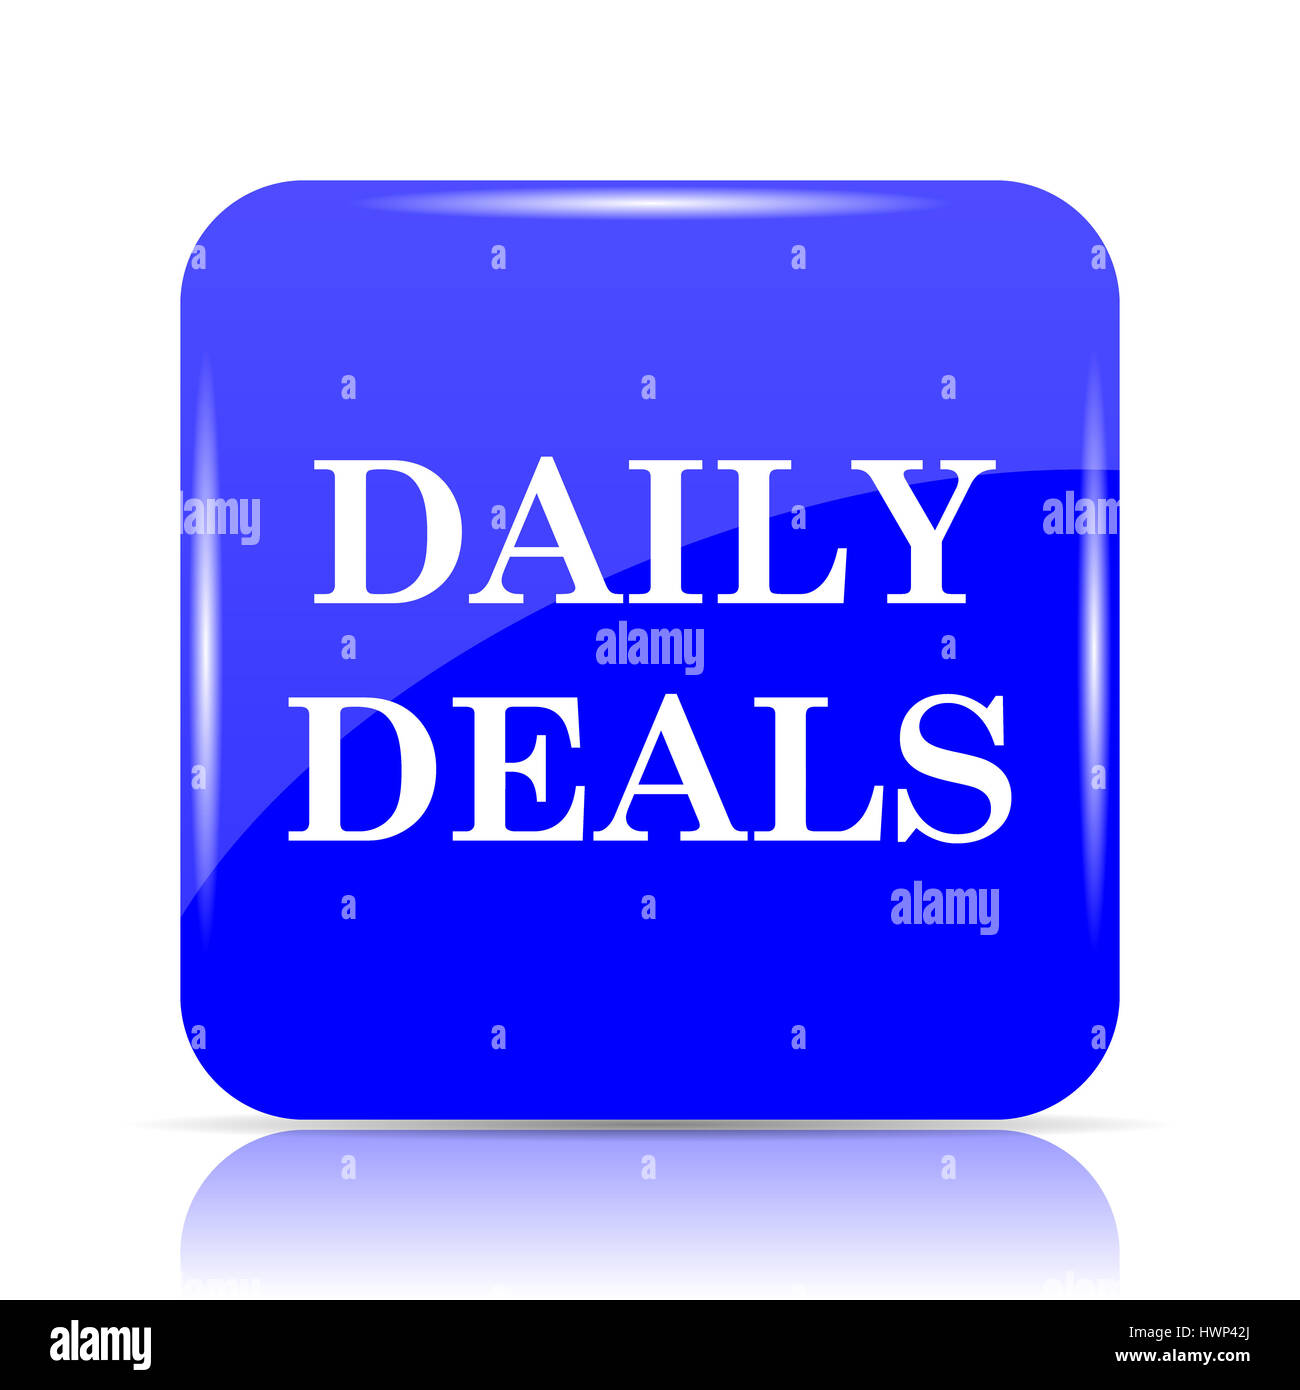 https://c8.alamy.com/comp/HWP42J/daily-deals-icon-blue-website-button-on-white-background-HWP42J.jpg